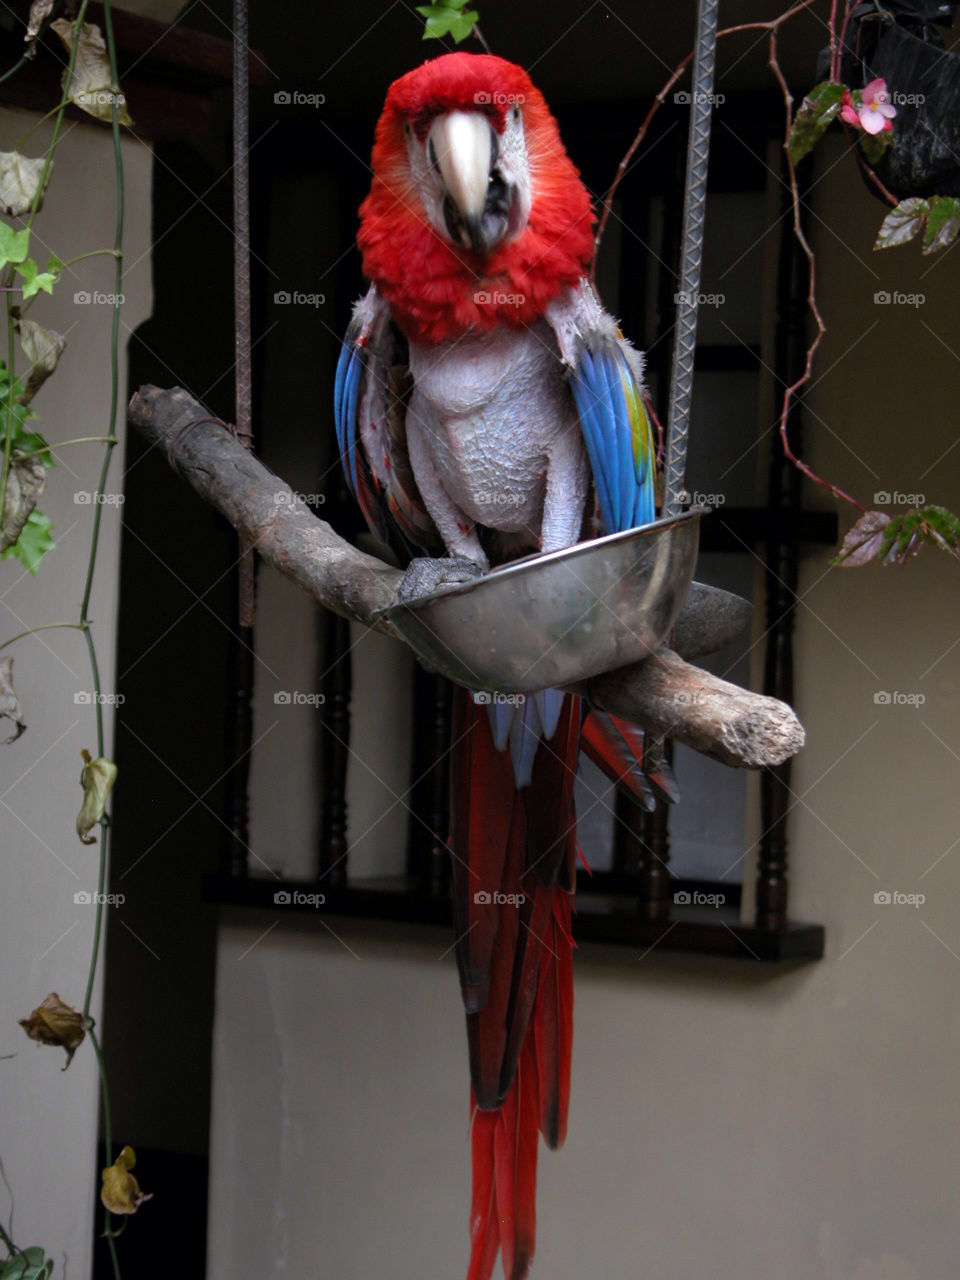 parrot antigua multi colored antigua guatemala by jpt4u